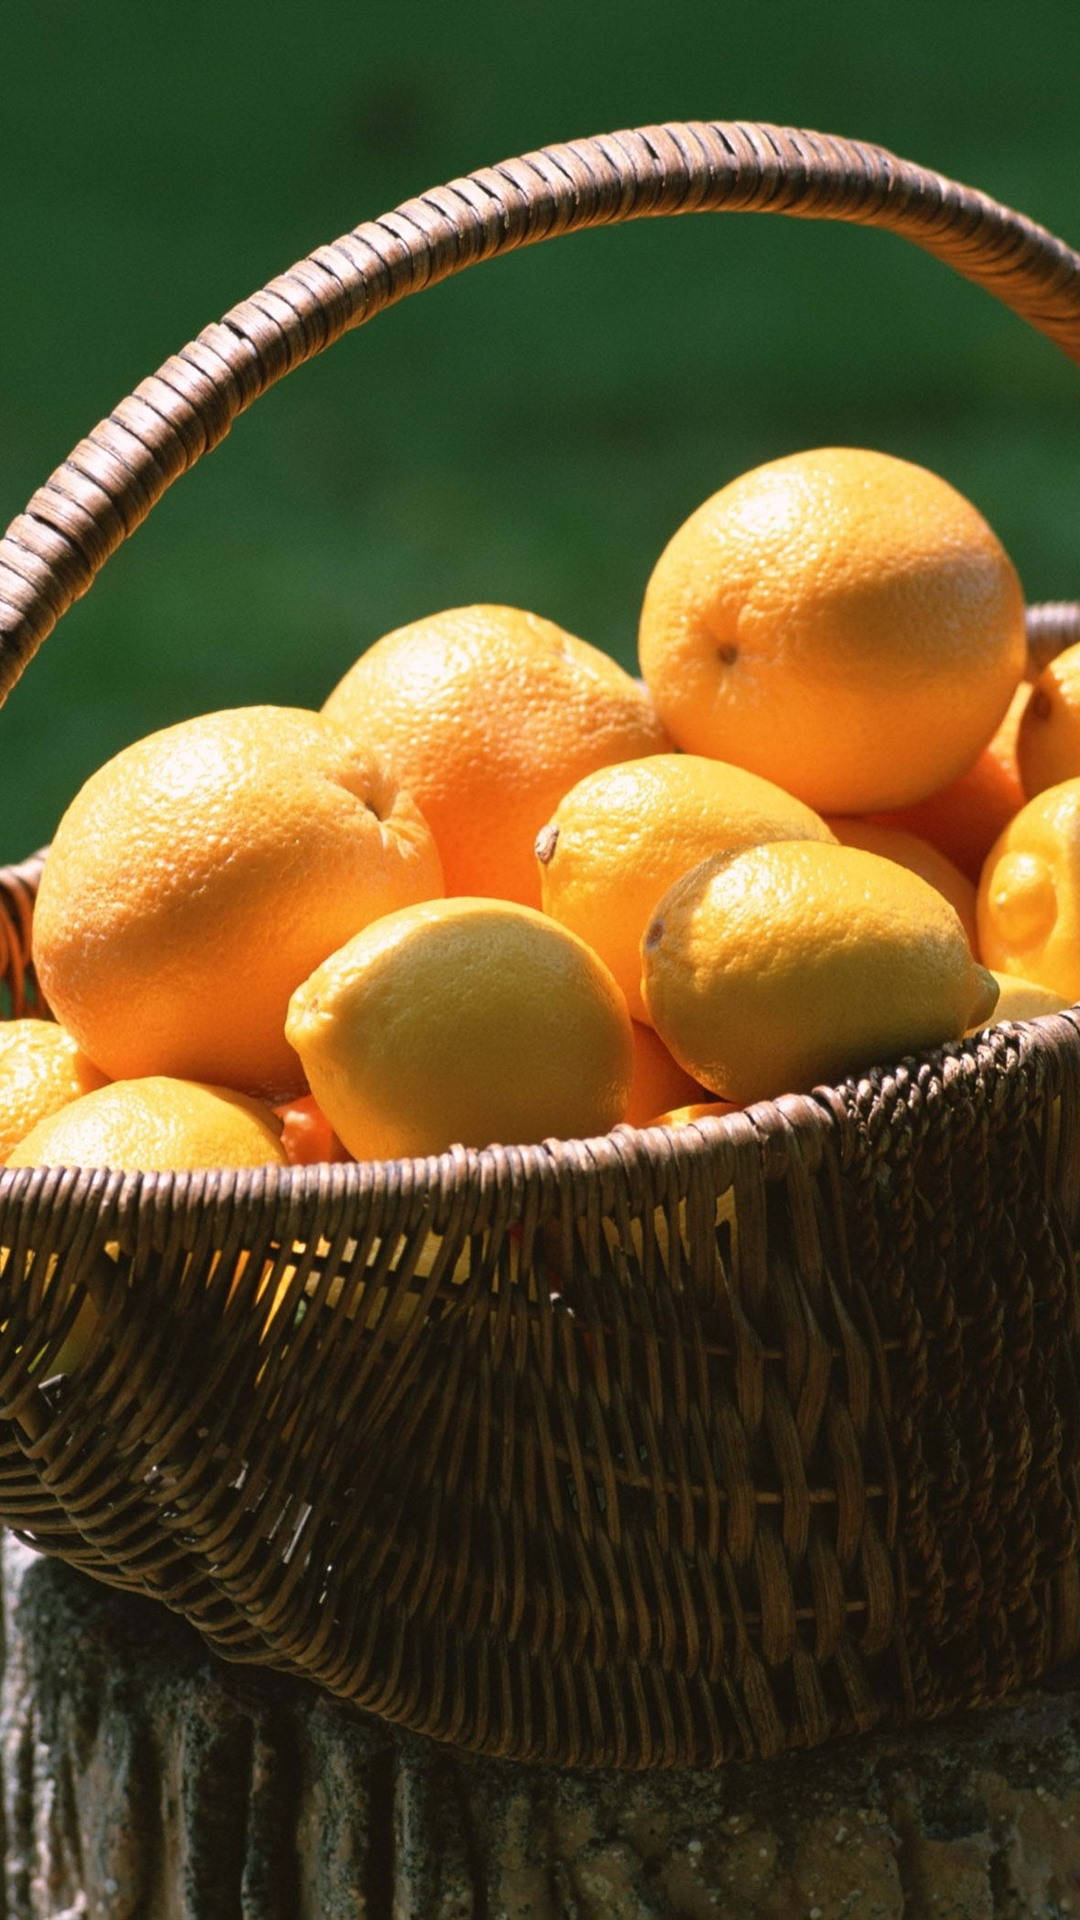 Oranges And Lemons In A Basket Wallpaper